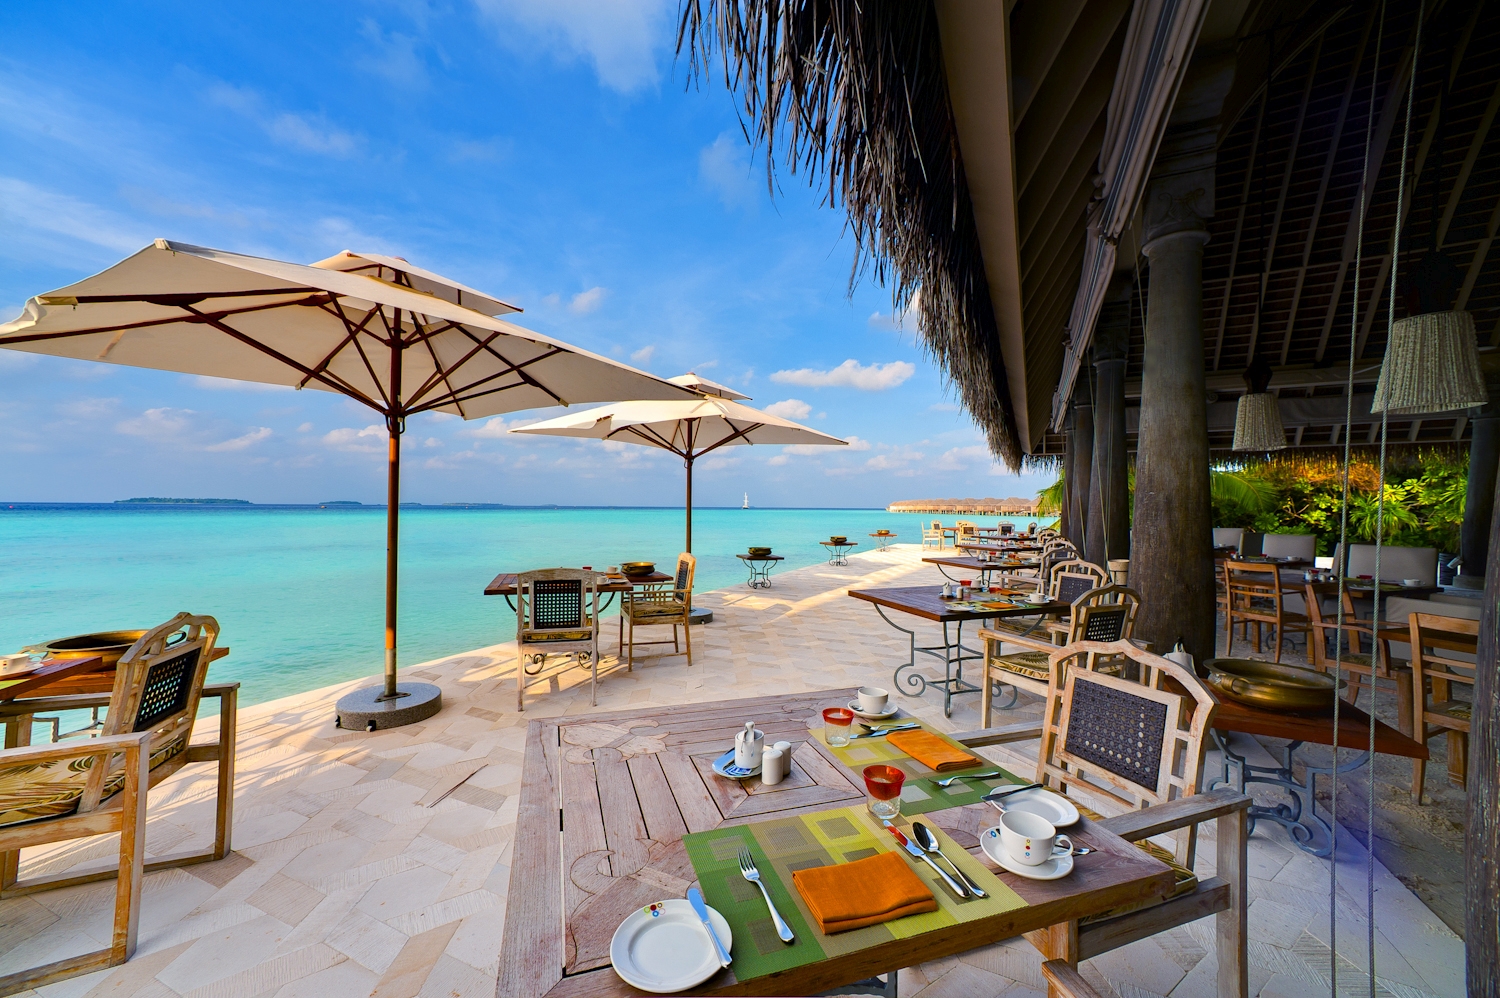 Sea-side breakfast at luxury resort Anantara Kihavah in the Maldives